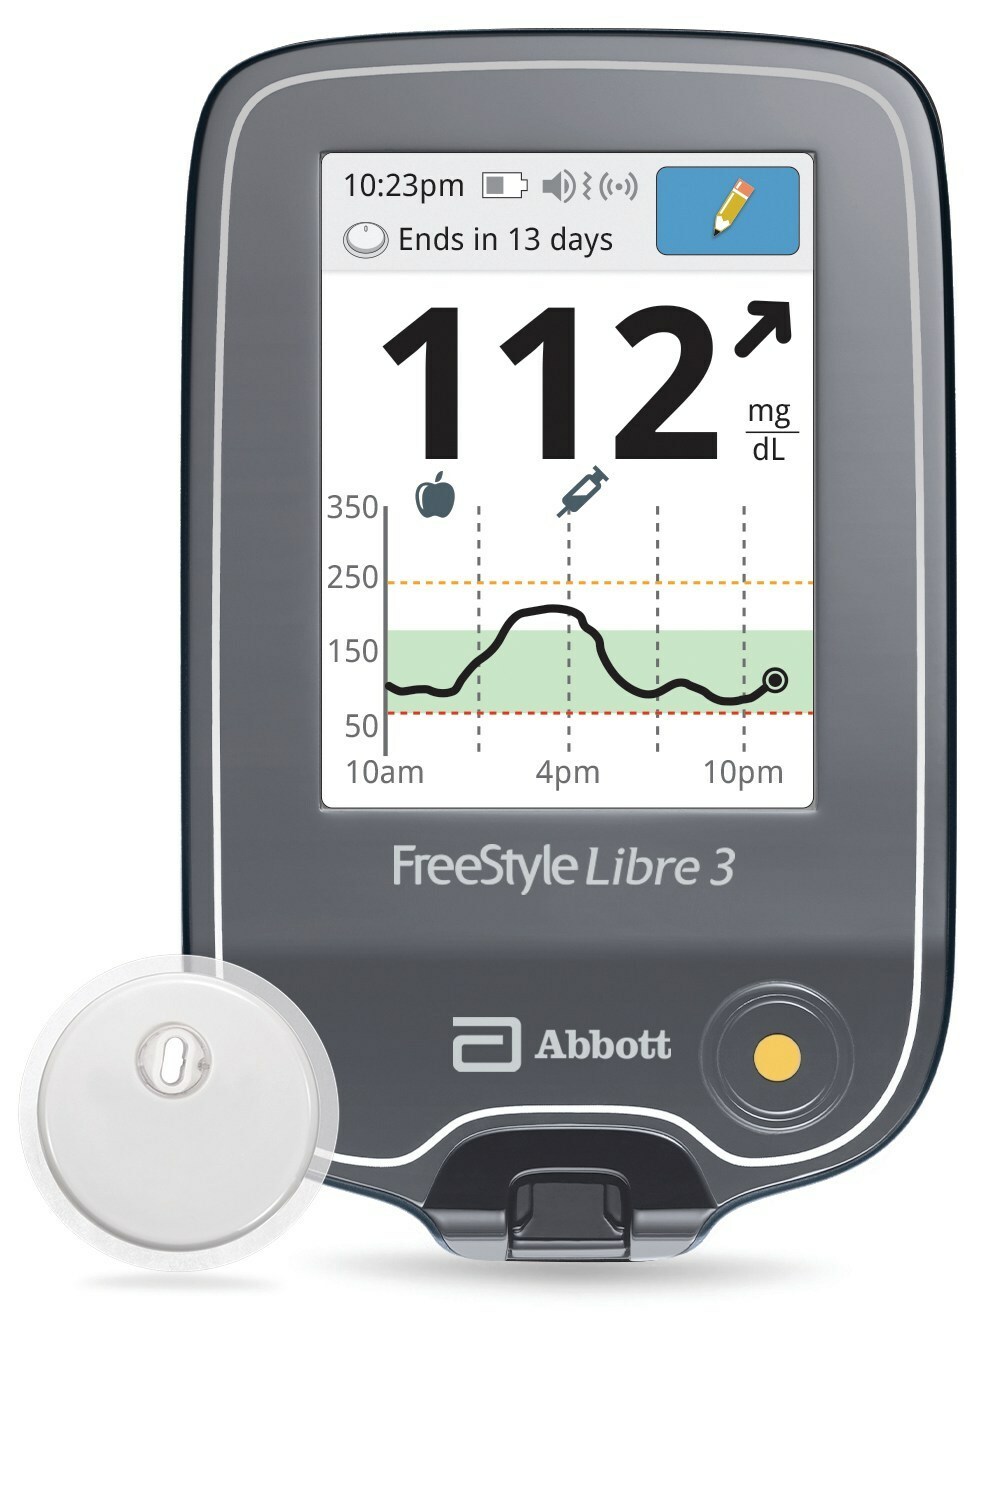 Comparing FreeStyle Libre vs. Fingersticks in Type 2 Diabetes